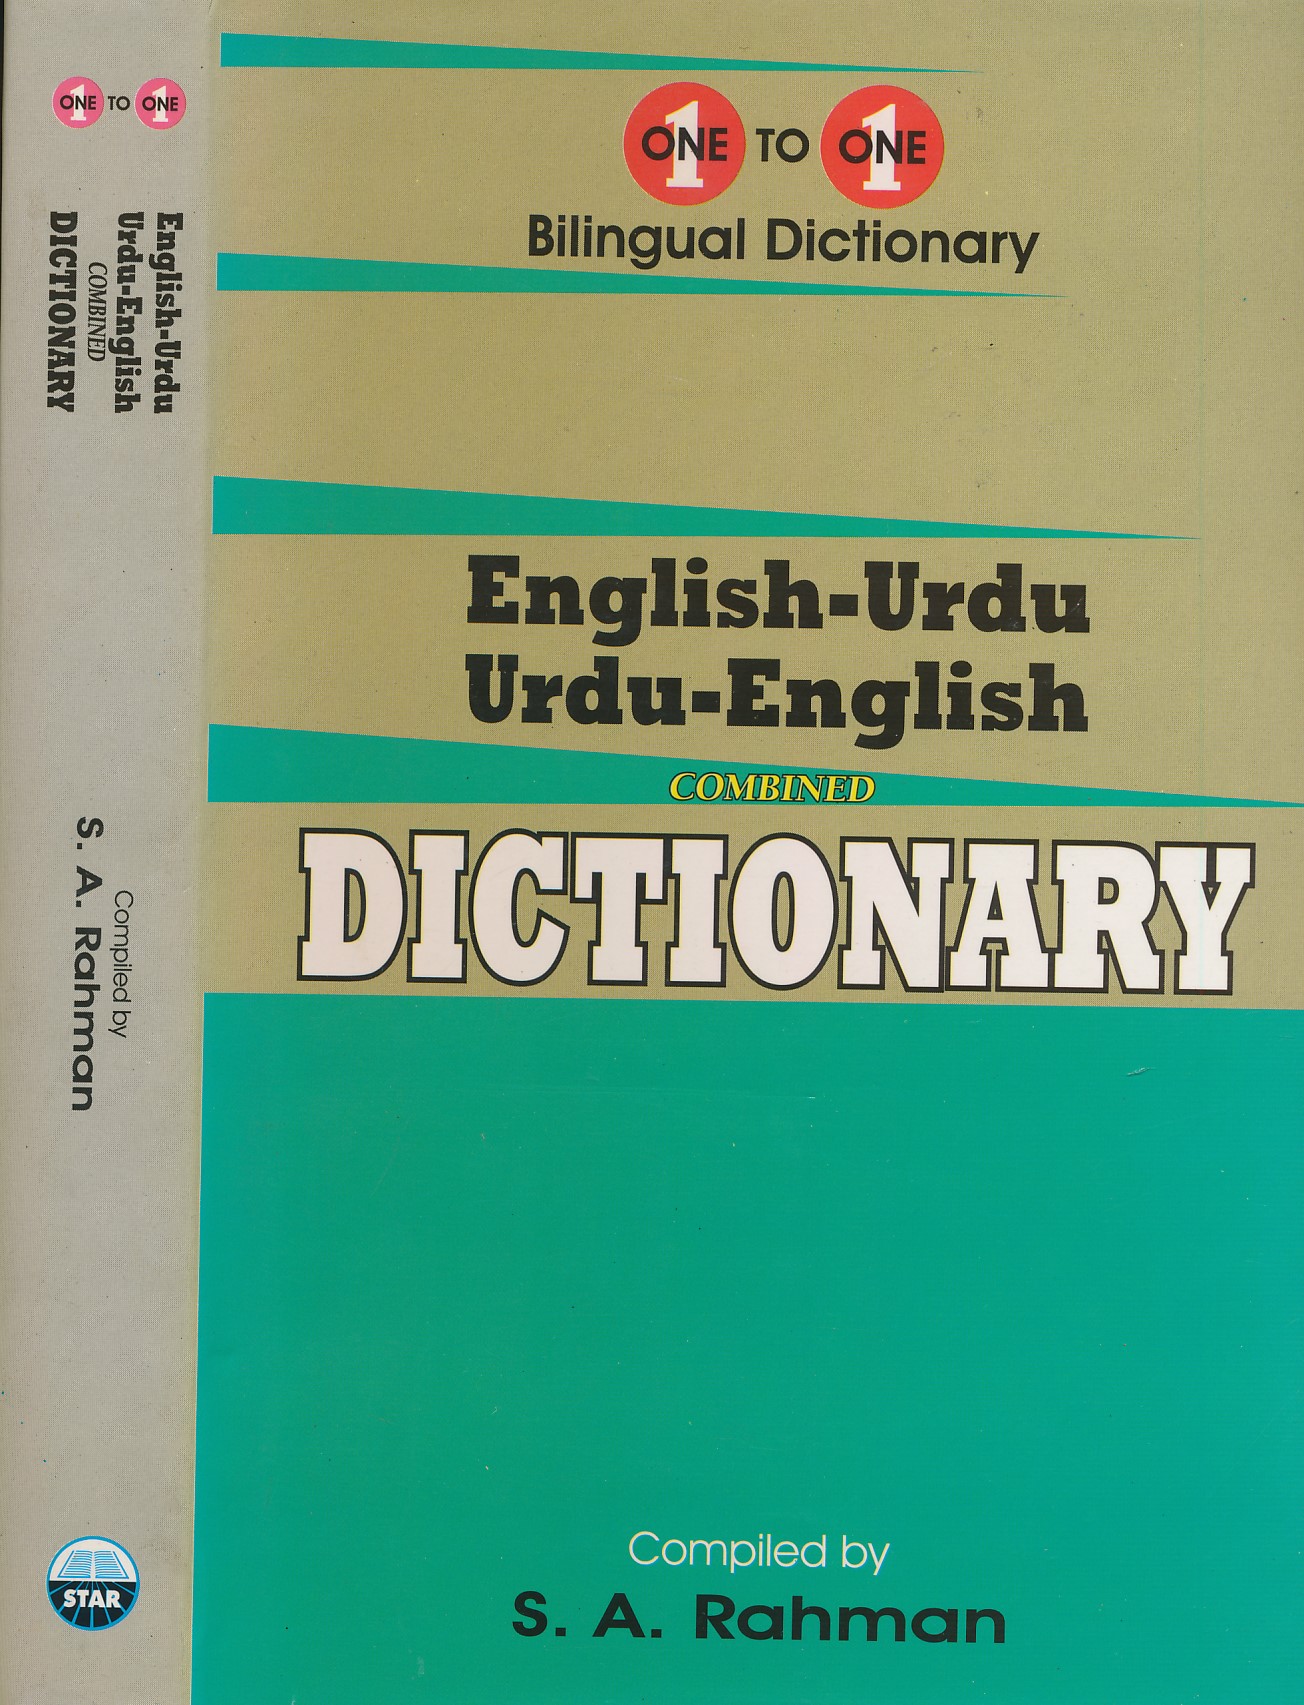 One to One Bilingual Dictionary. English-Urdu Urdu-English Dictionary.